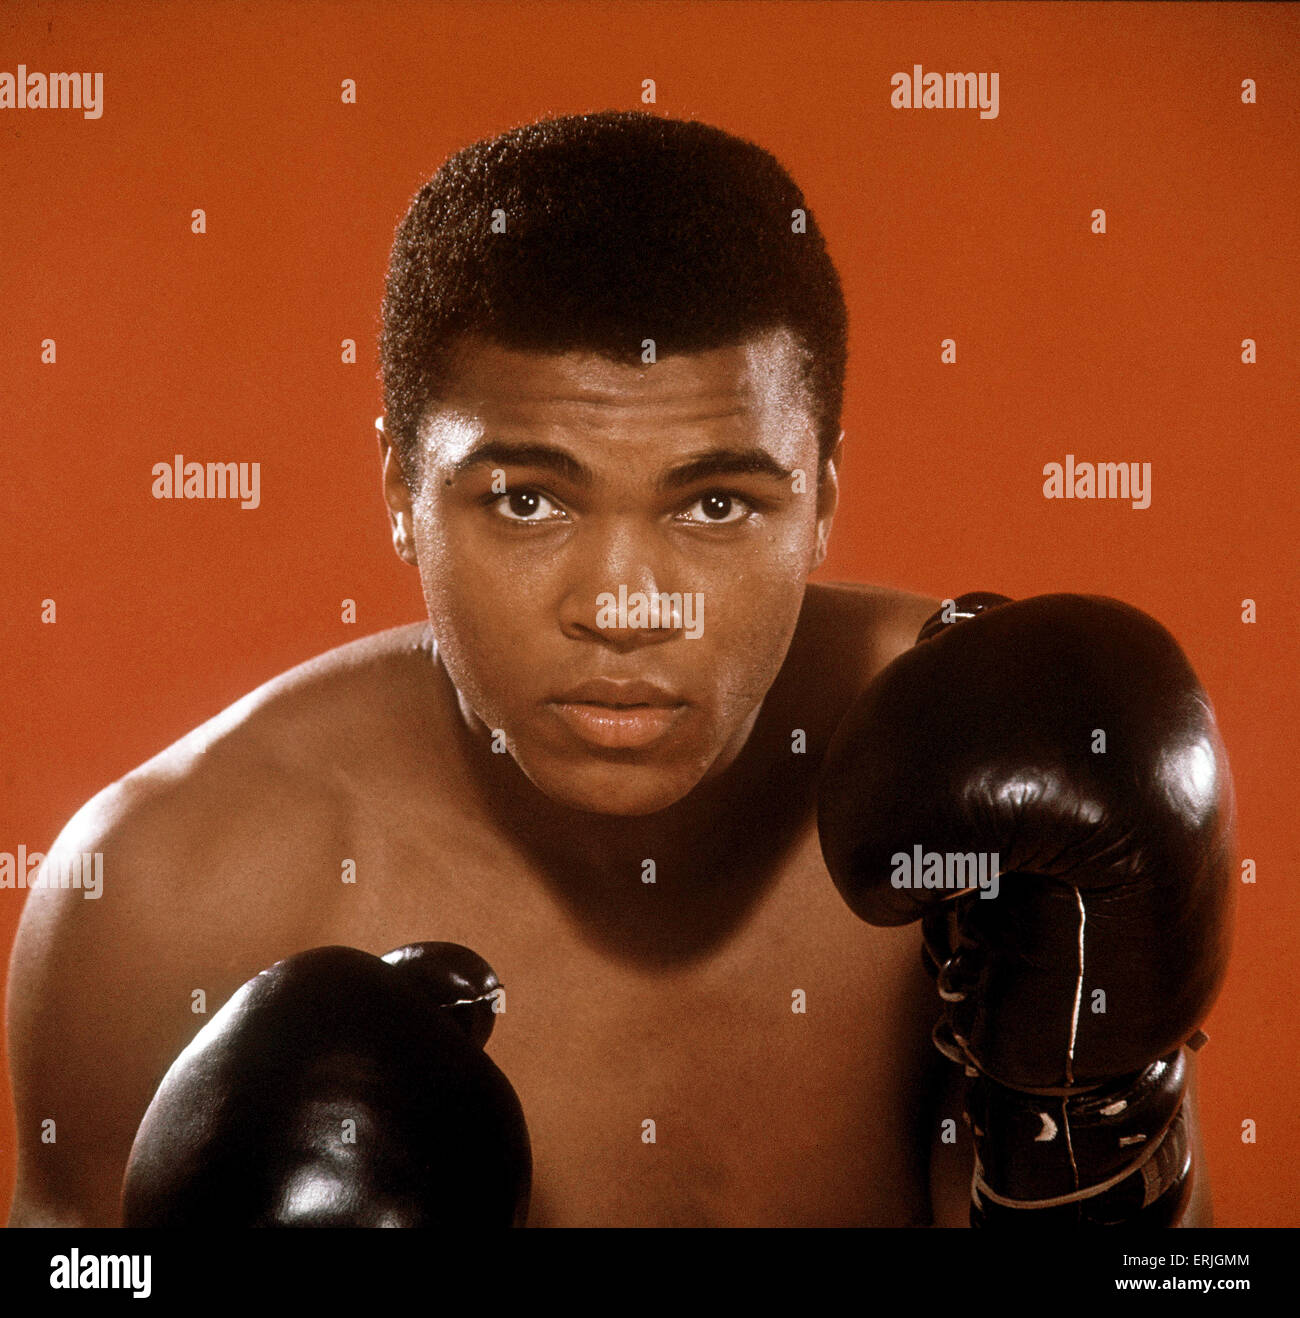 Muhammad Ali aka boxeur Cassius Clay shoot photo. Vers 1966 Photo Stock -  Alamy